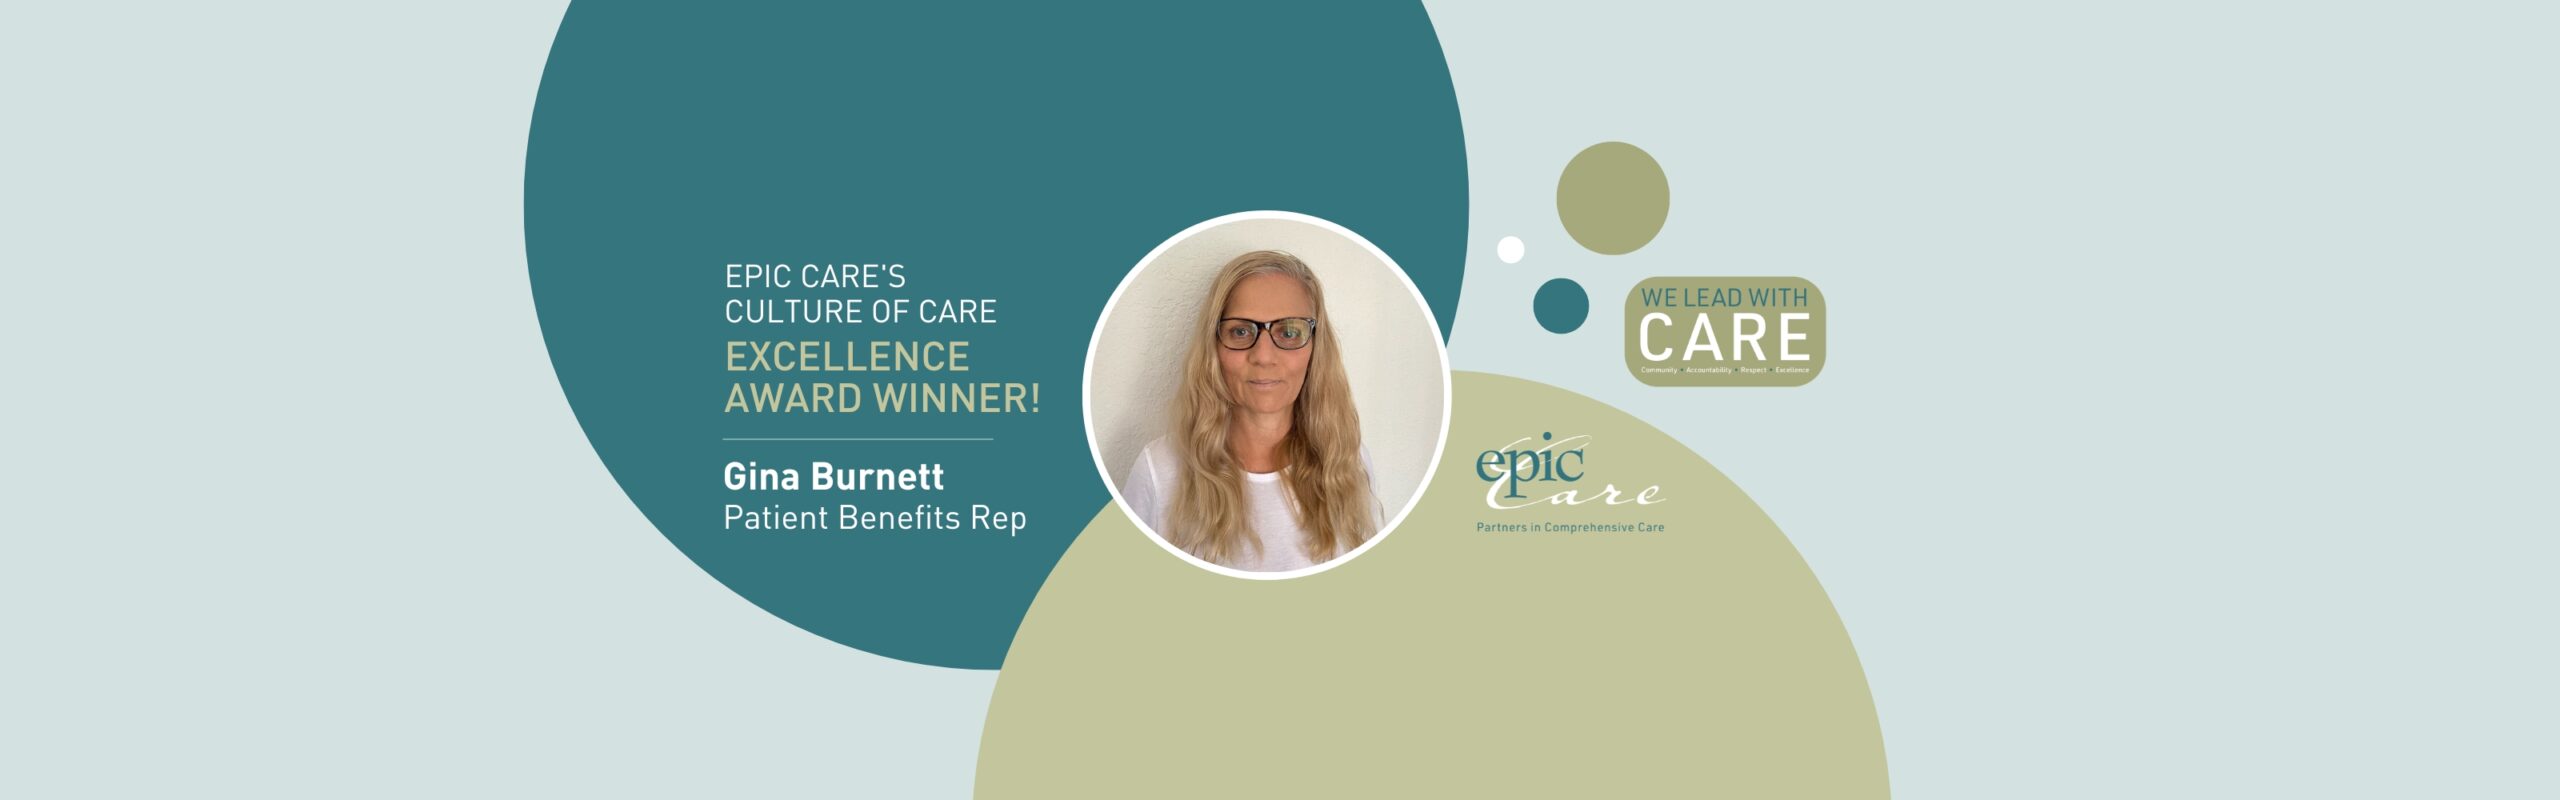 Epic Care’s Culture of CARE Excellence Award Winner! – Gina Burnett